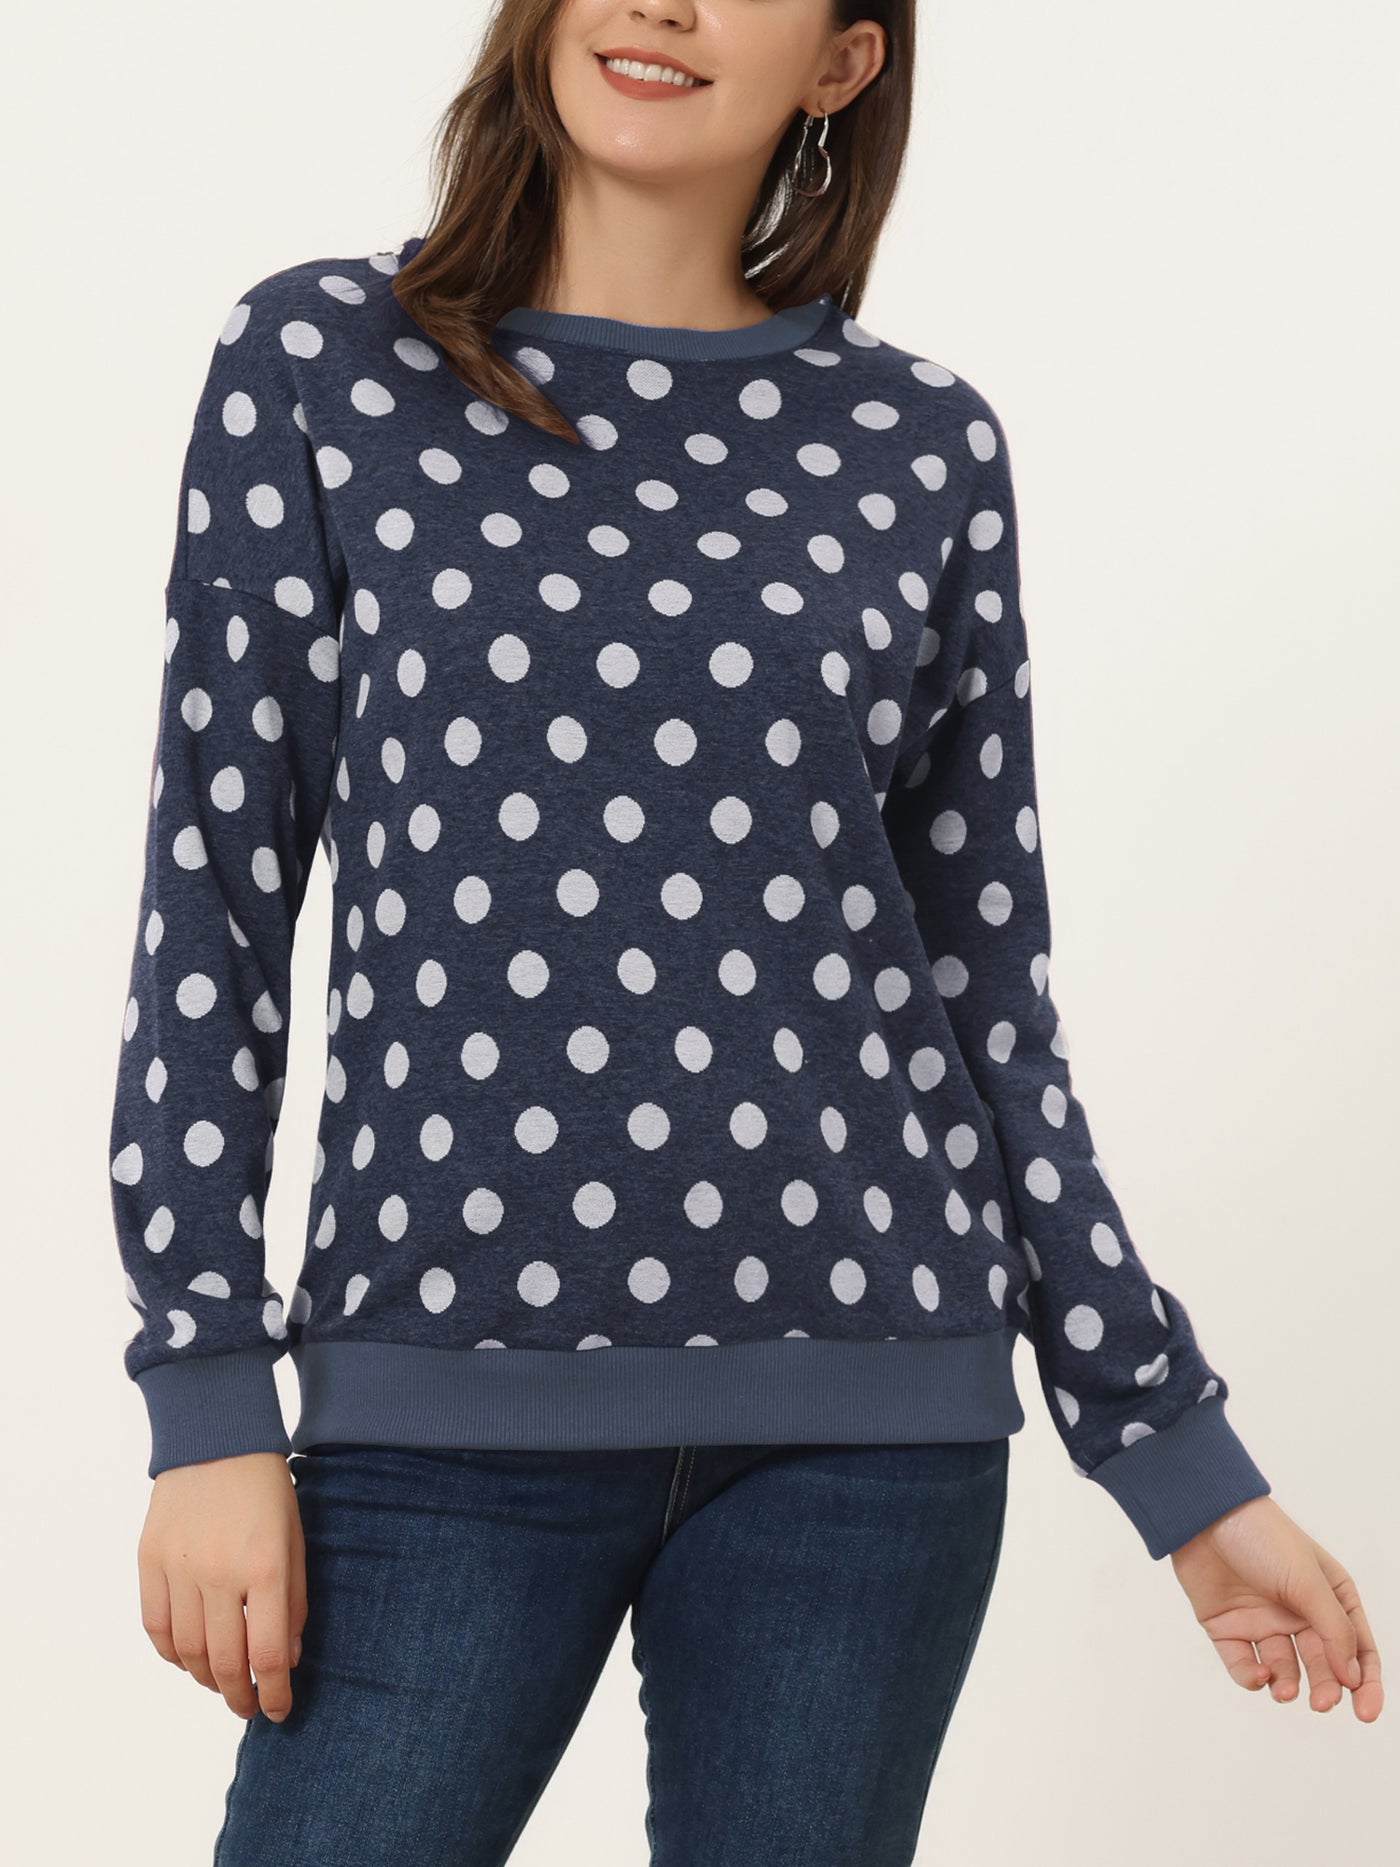 Allegra K Winter Knitted Pullover Sweatshirt Long Sleeve Polka Dot Sweater